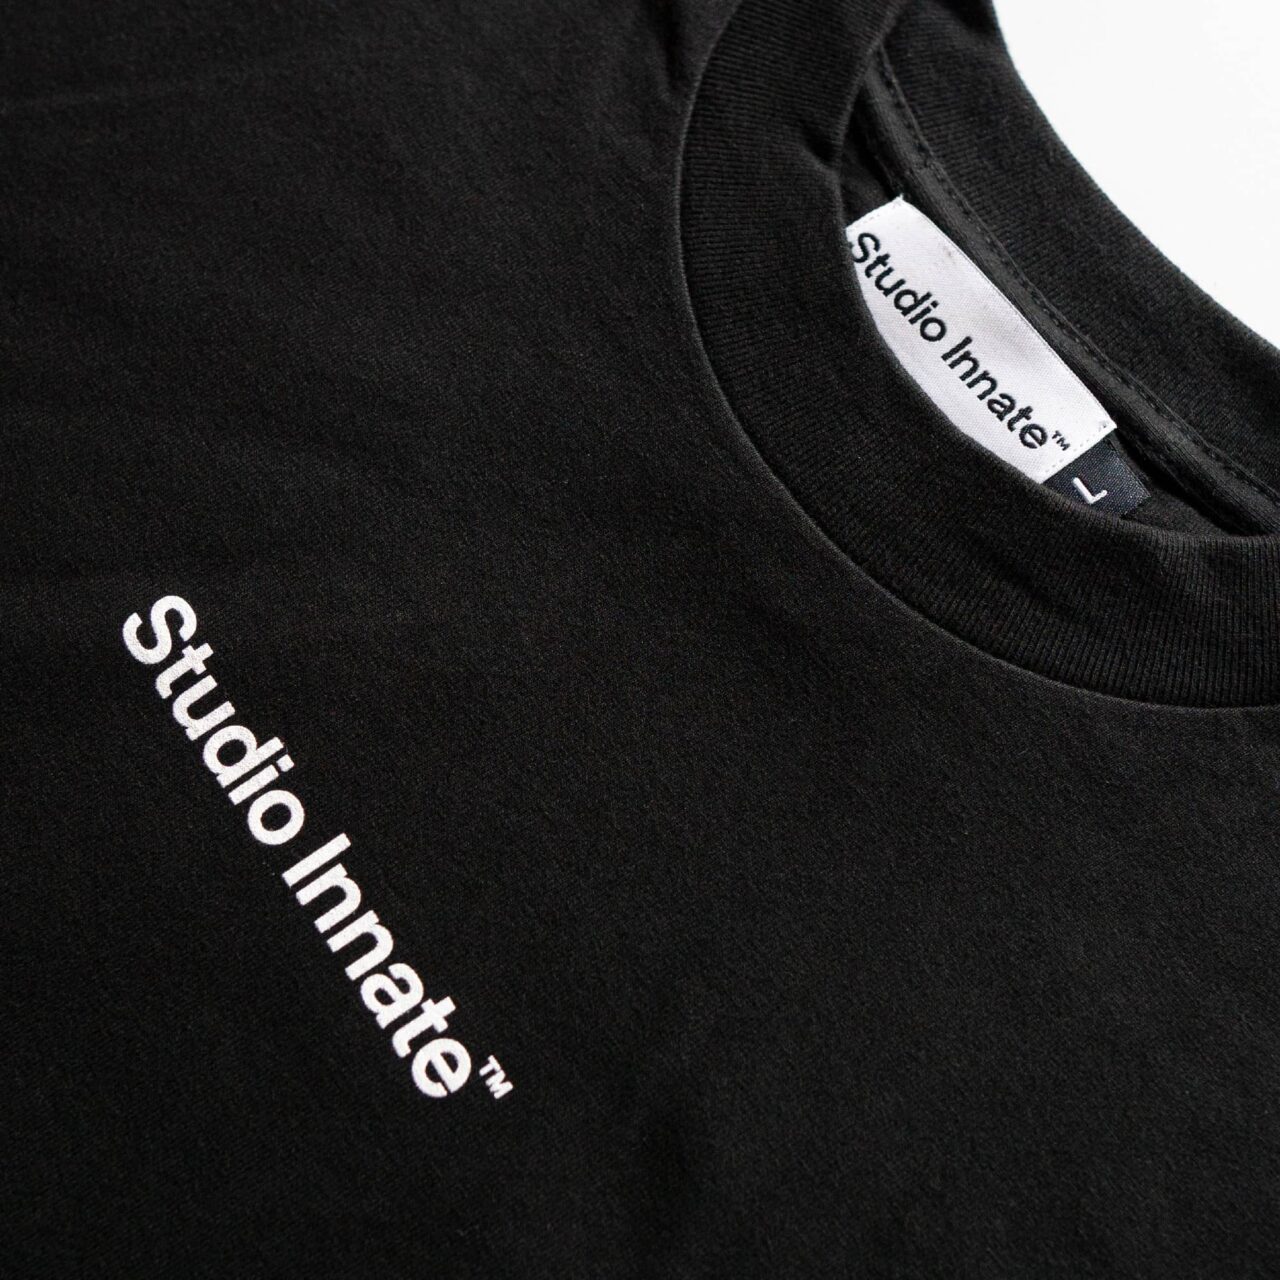 Luxury Black Studio Innate Branded T-Shirt | Official Merchandise